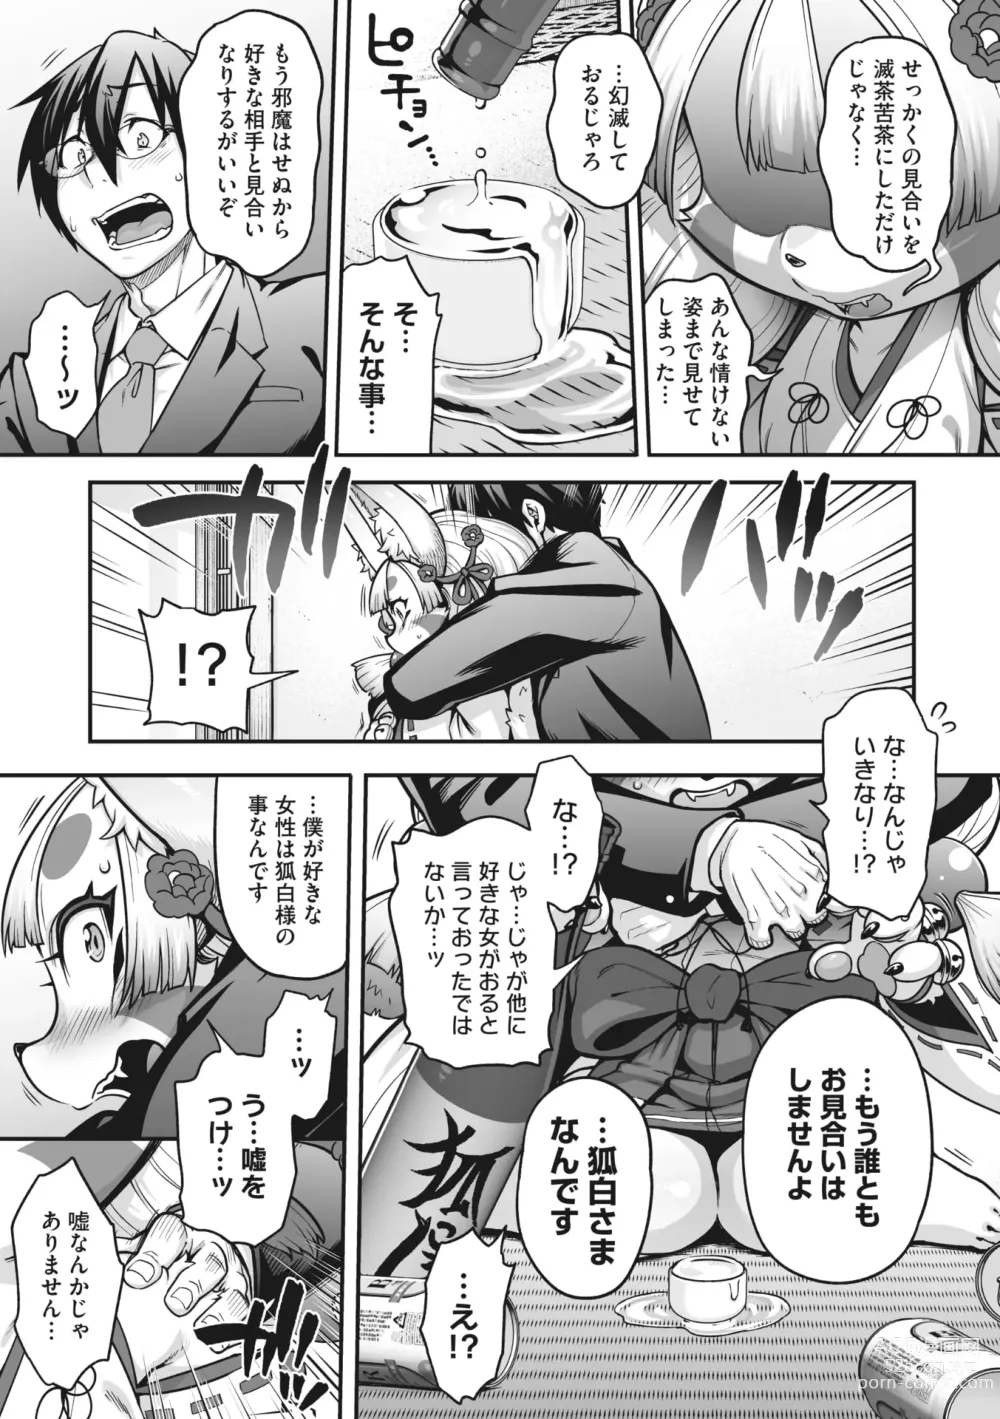 Page 17 of manga COMIC GAIRA Vol. 16